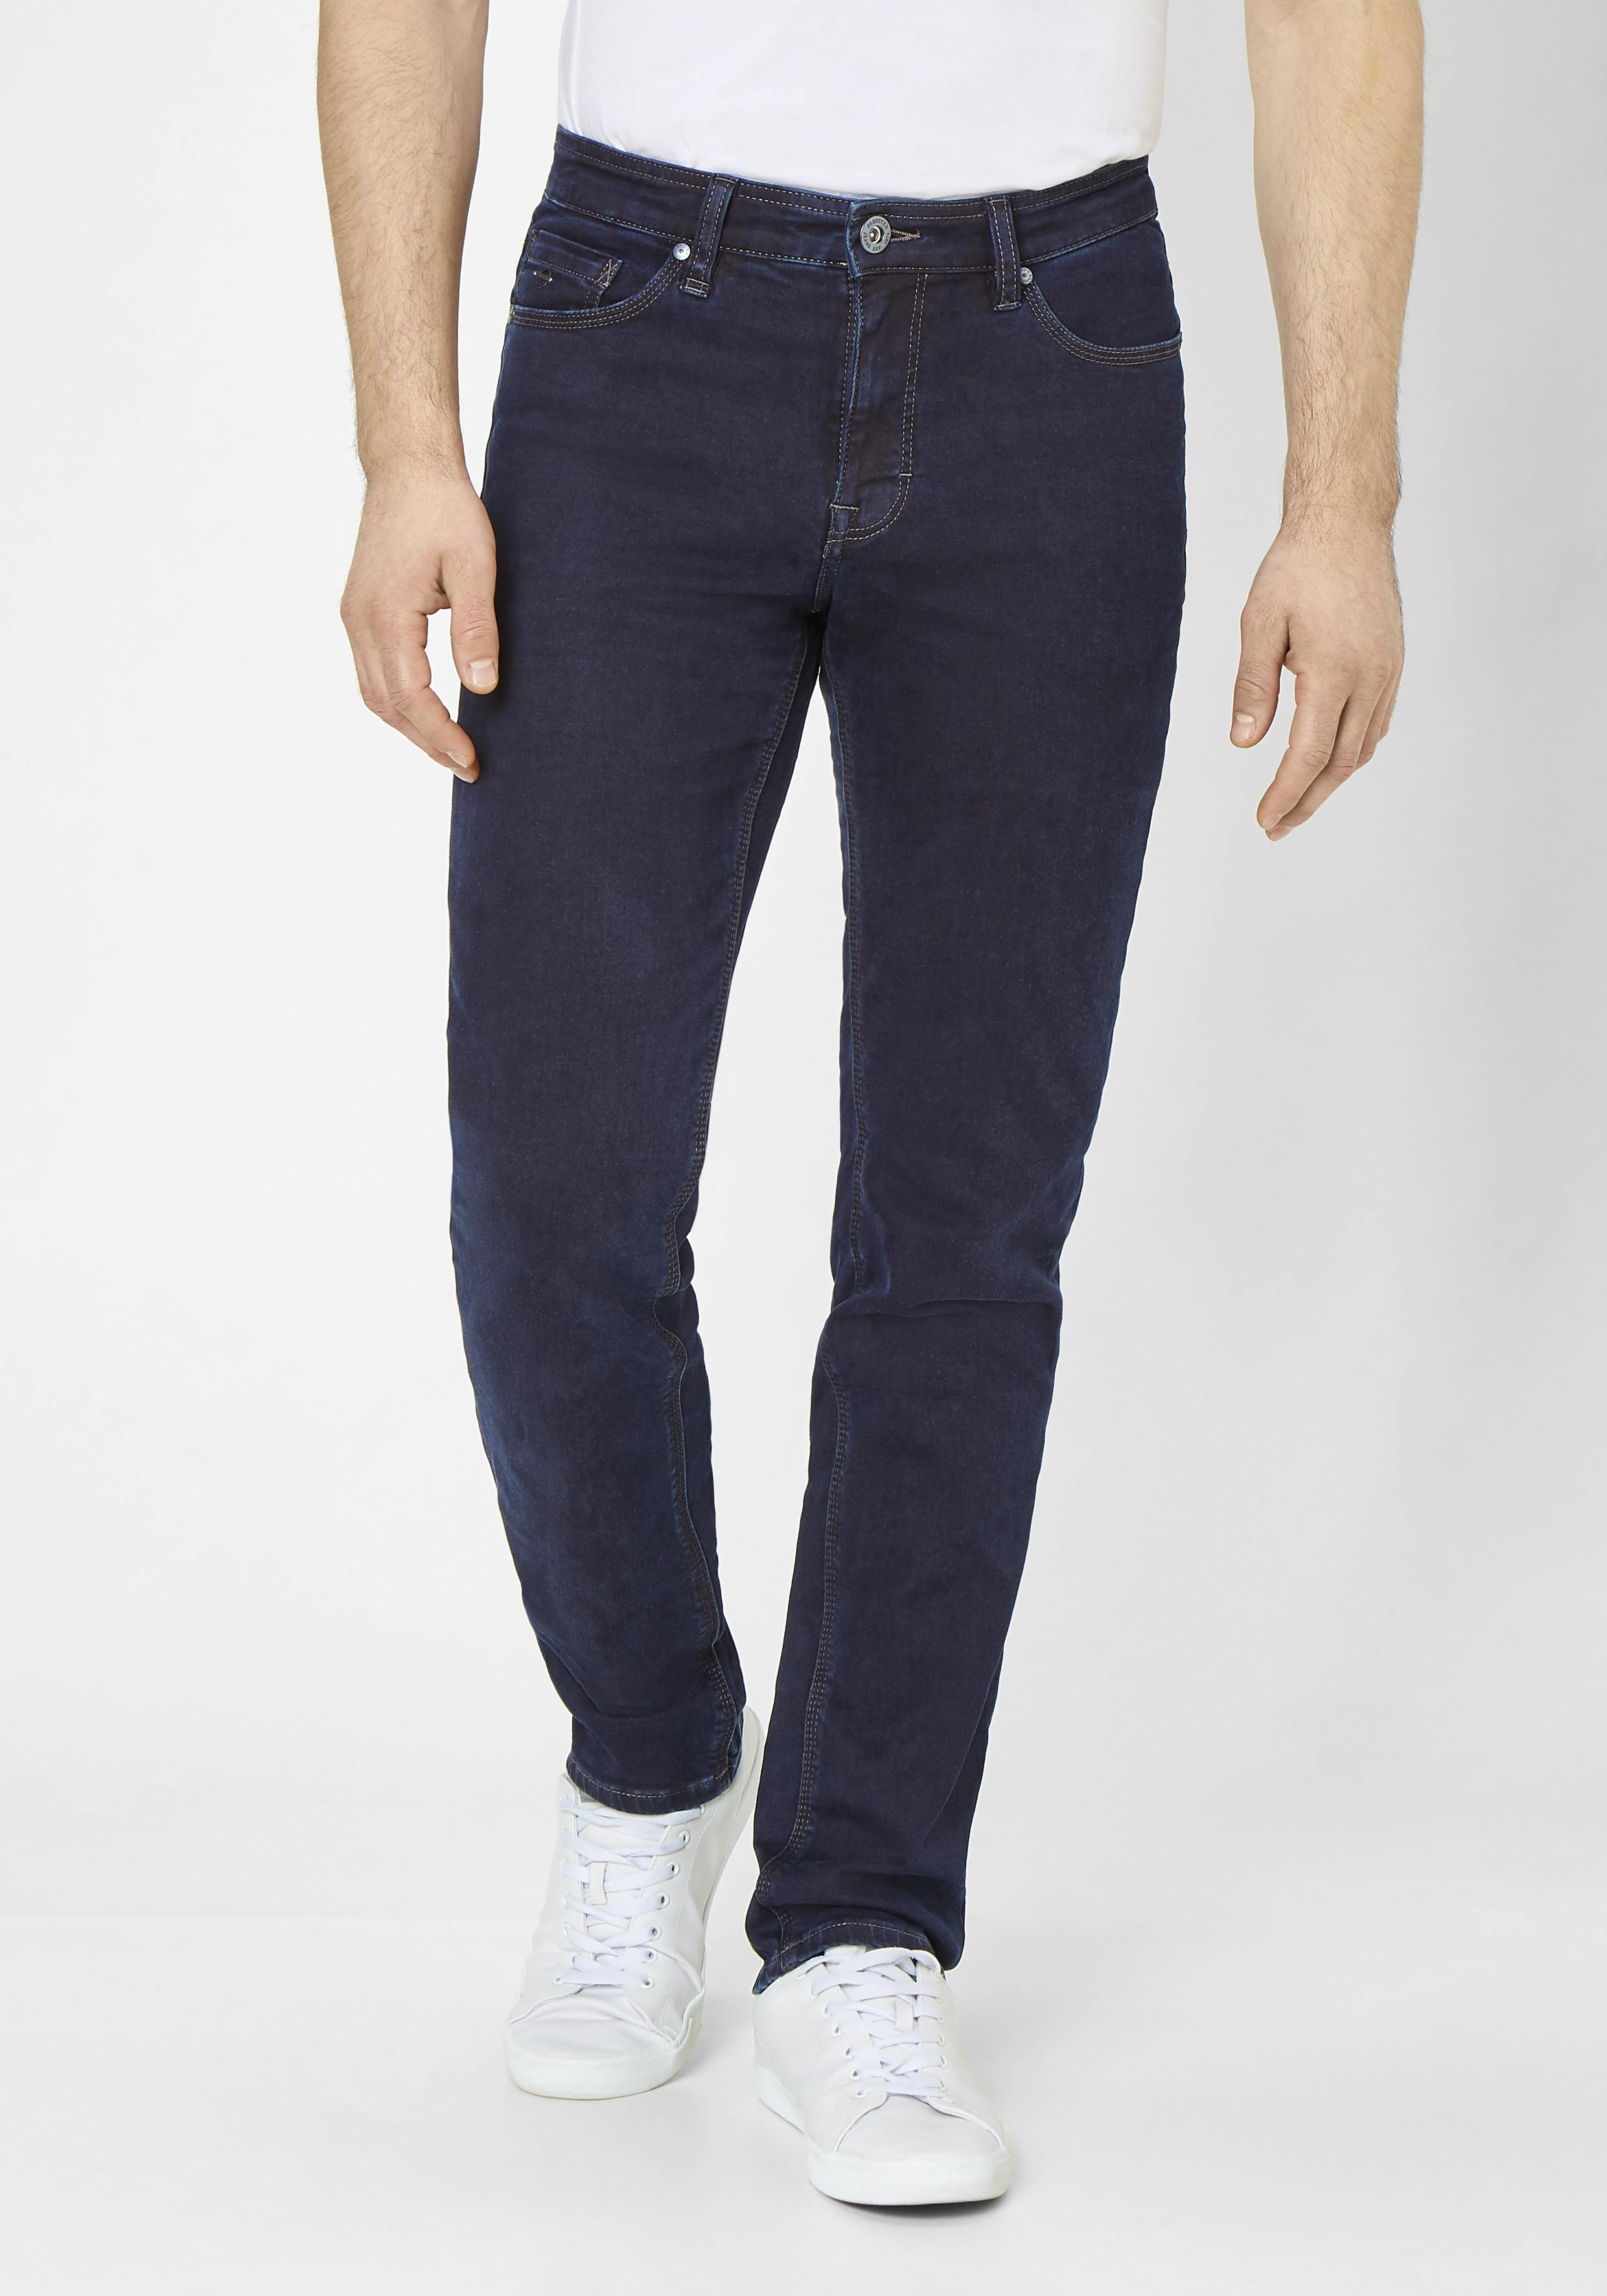 Image of Paddock&#039s Pipe Jeans Slim Fit blue black